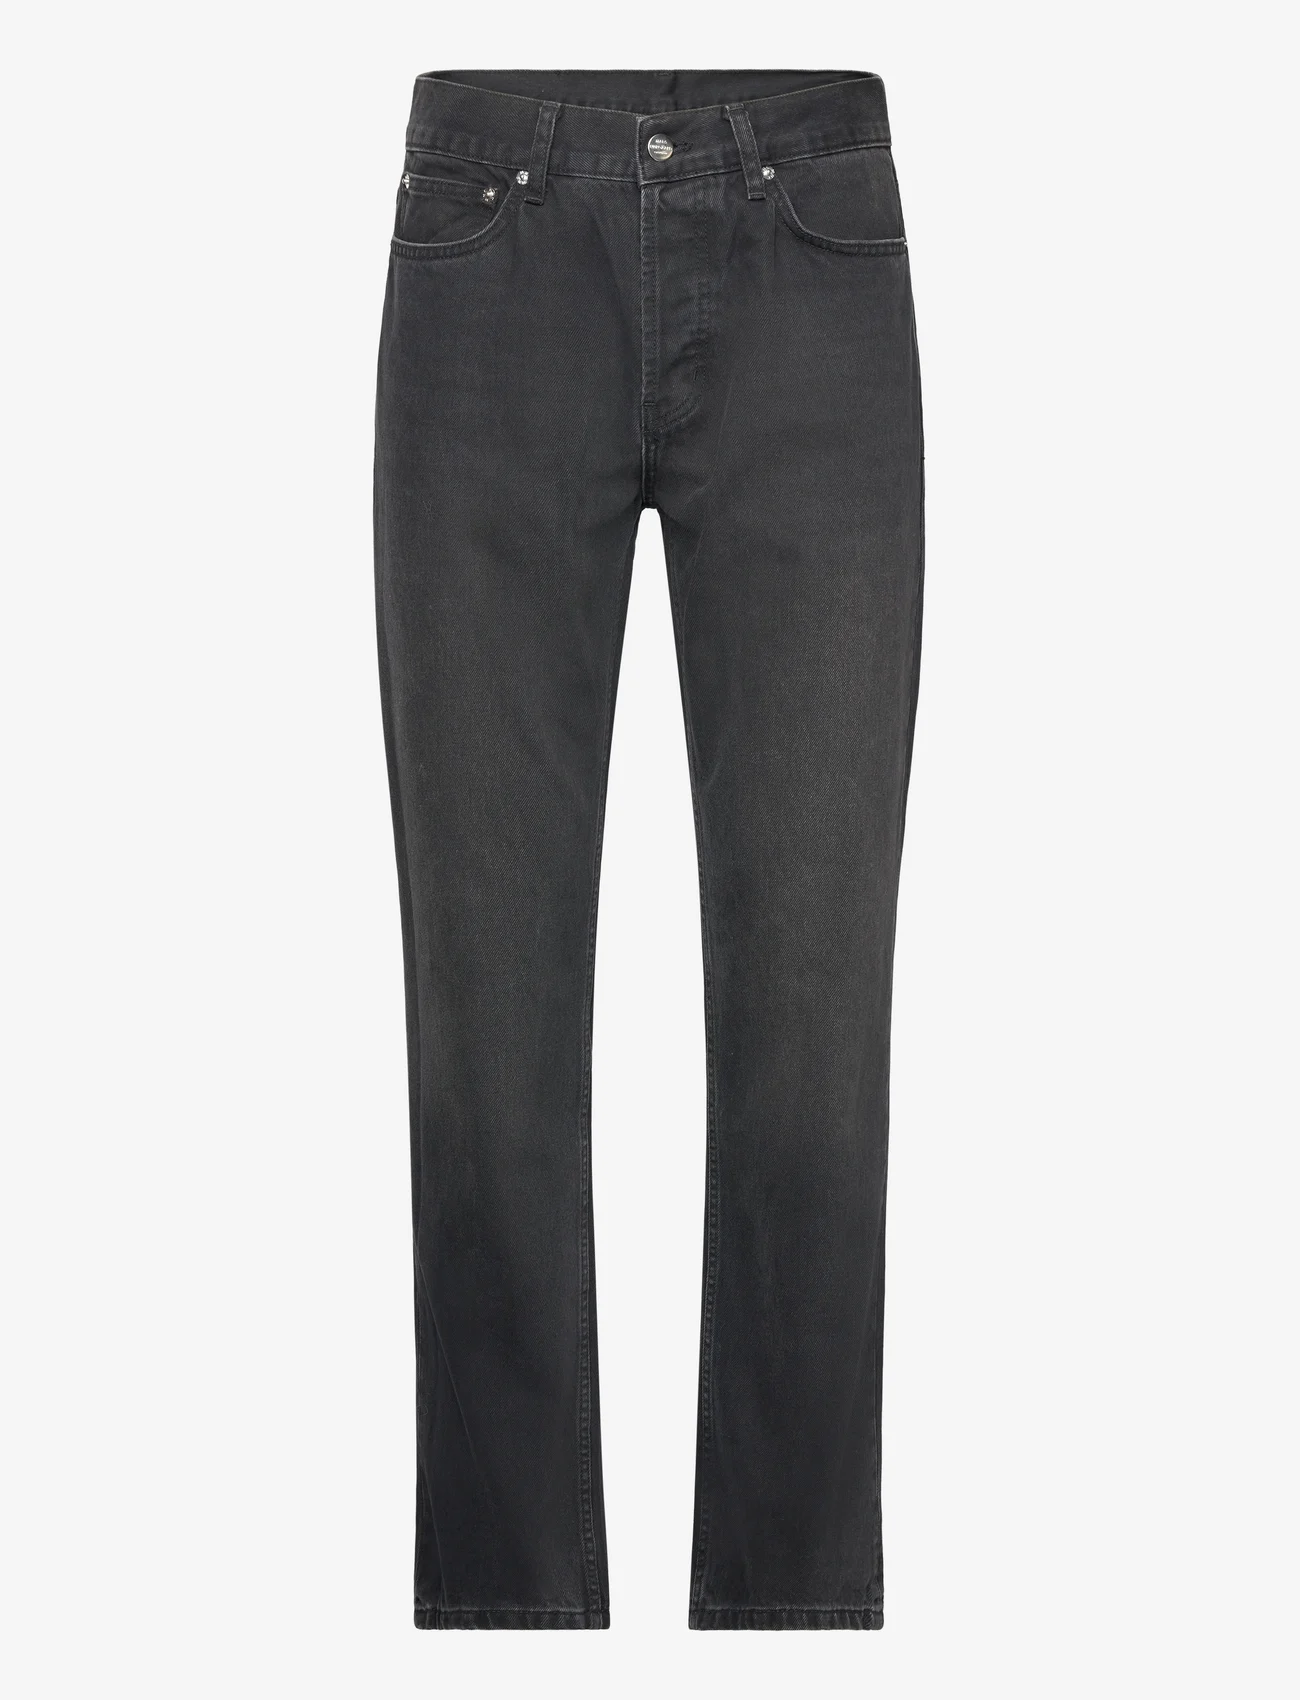 Mads Nørgaard - Organic Black Jas Jeans - regular jeans - black stone - 0